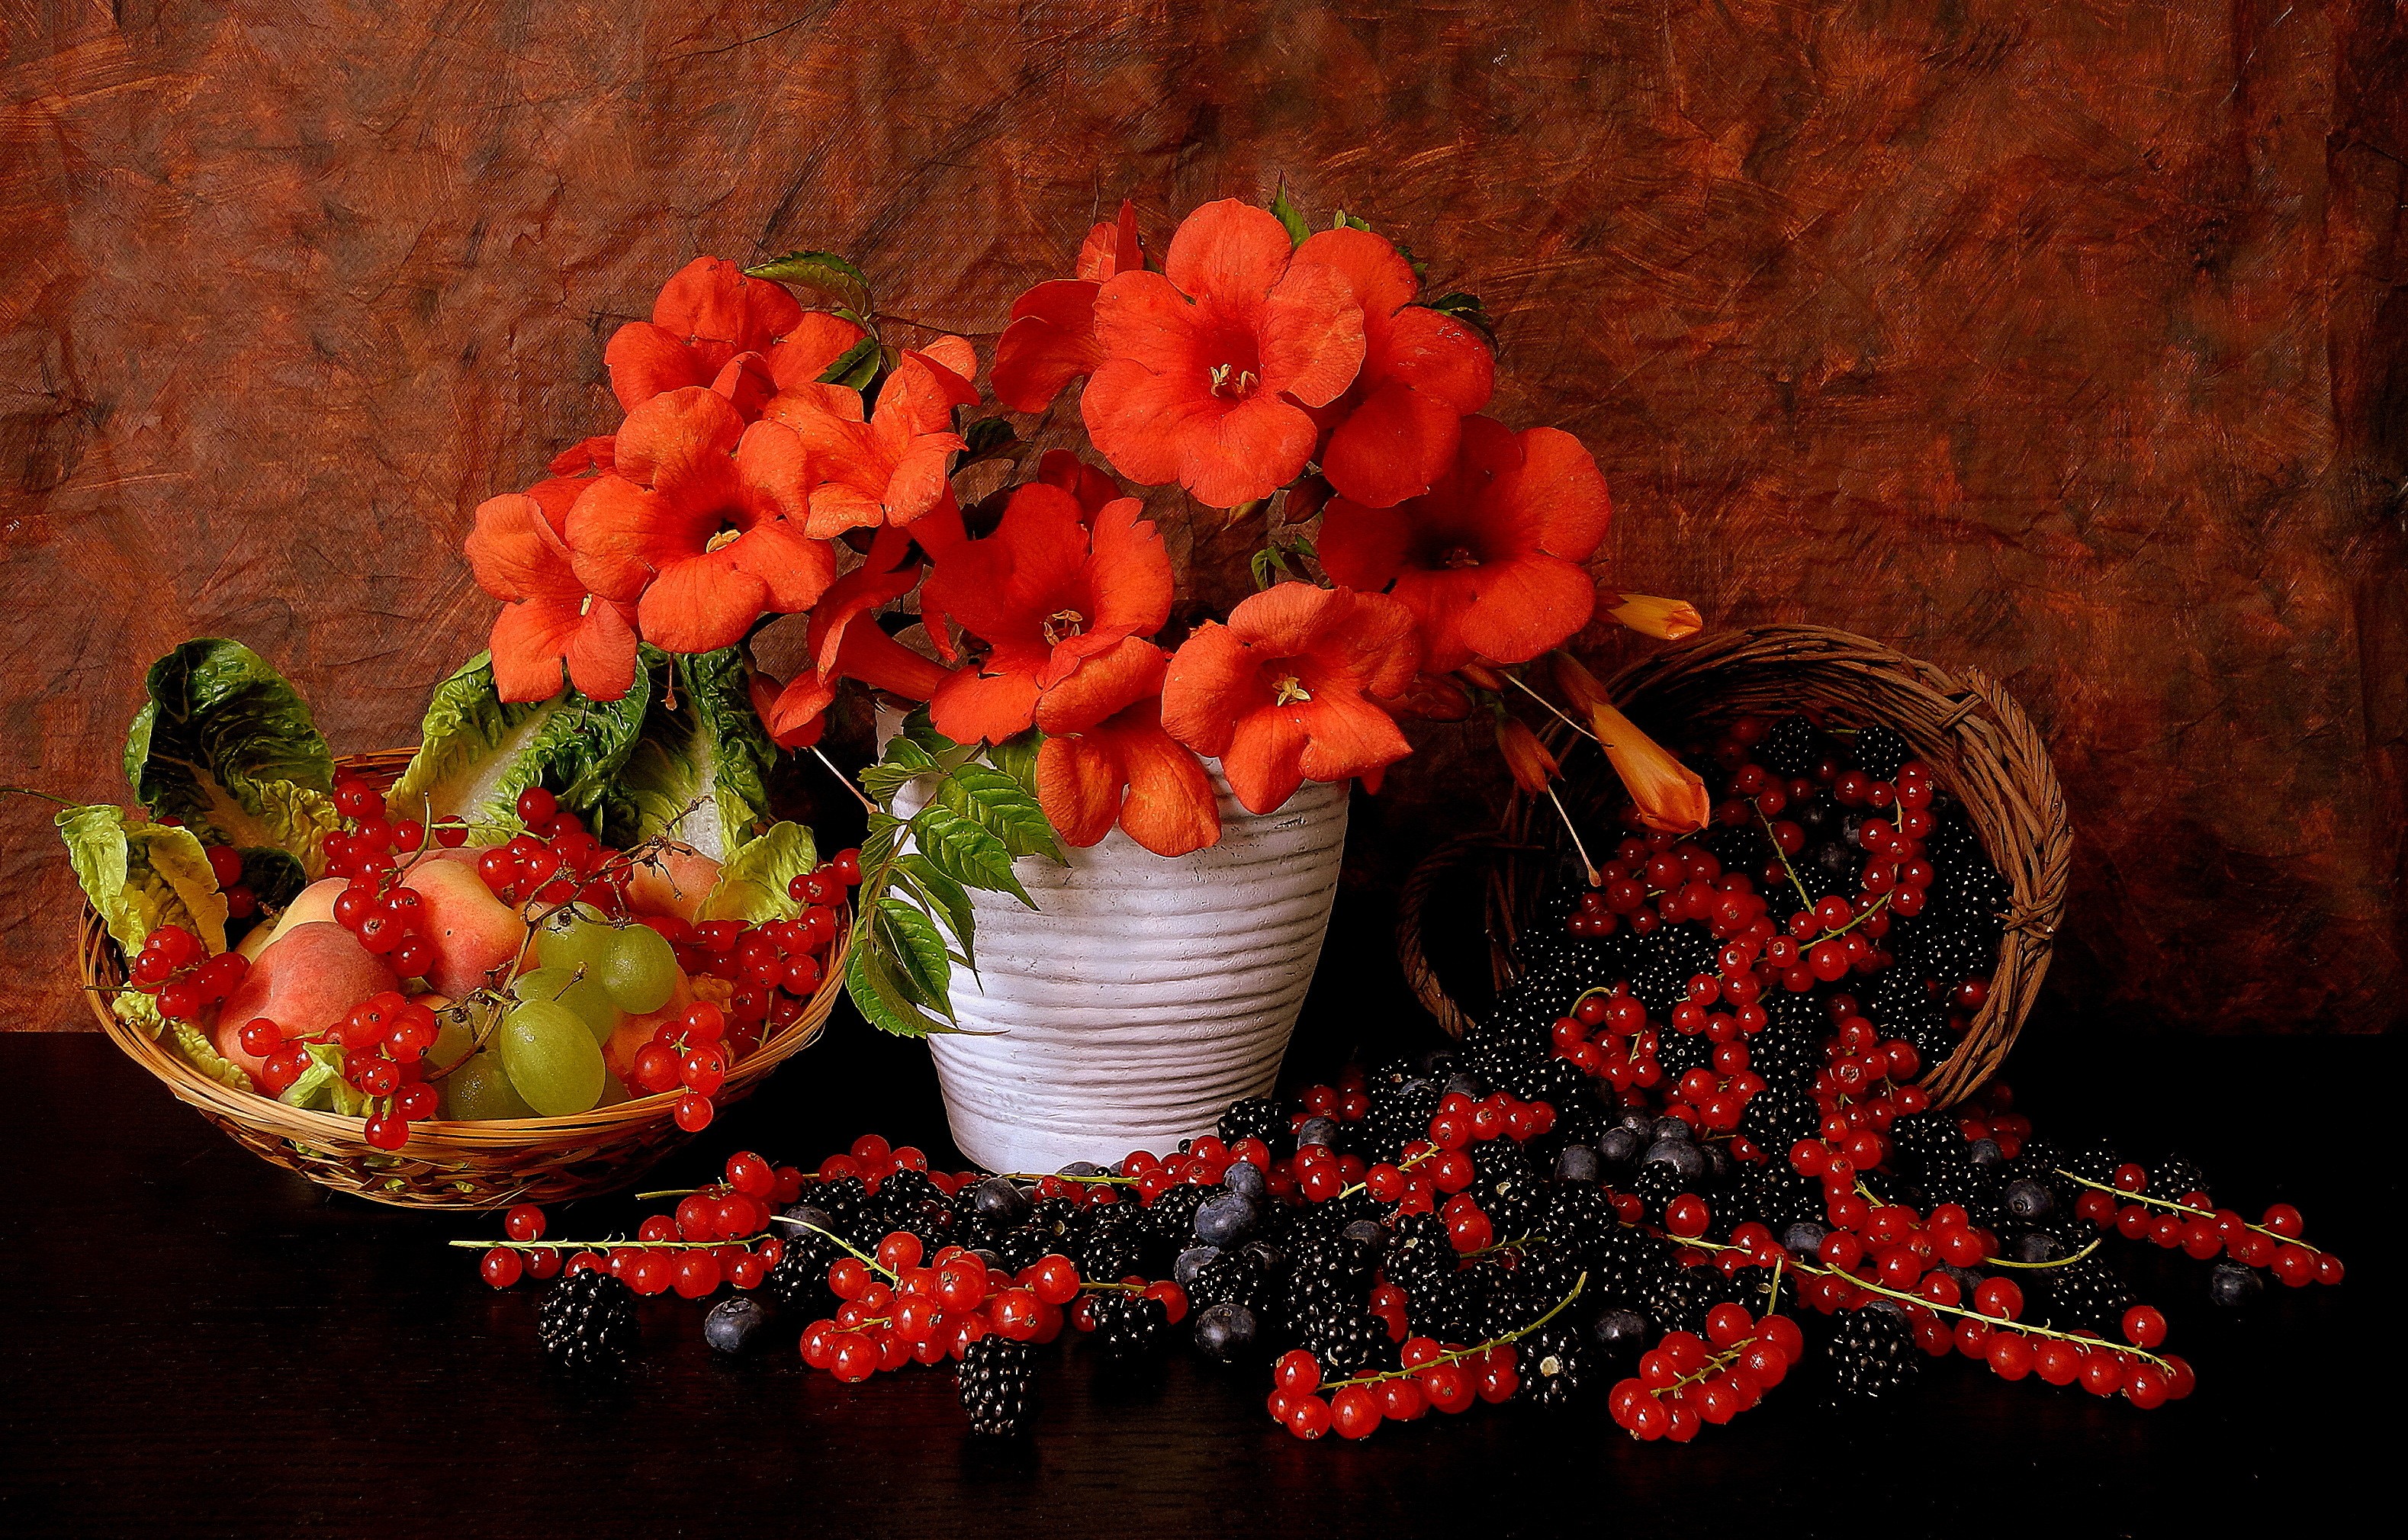 flower, photography, still life, basket, berry, currants, fruit, orange flower